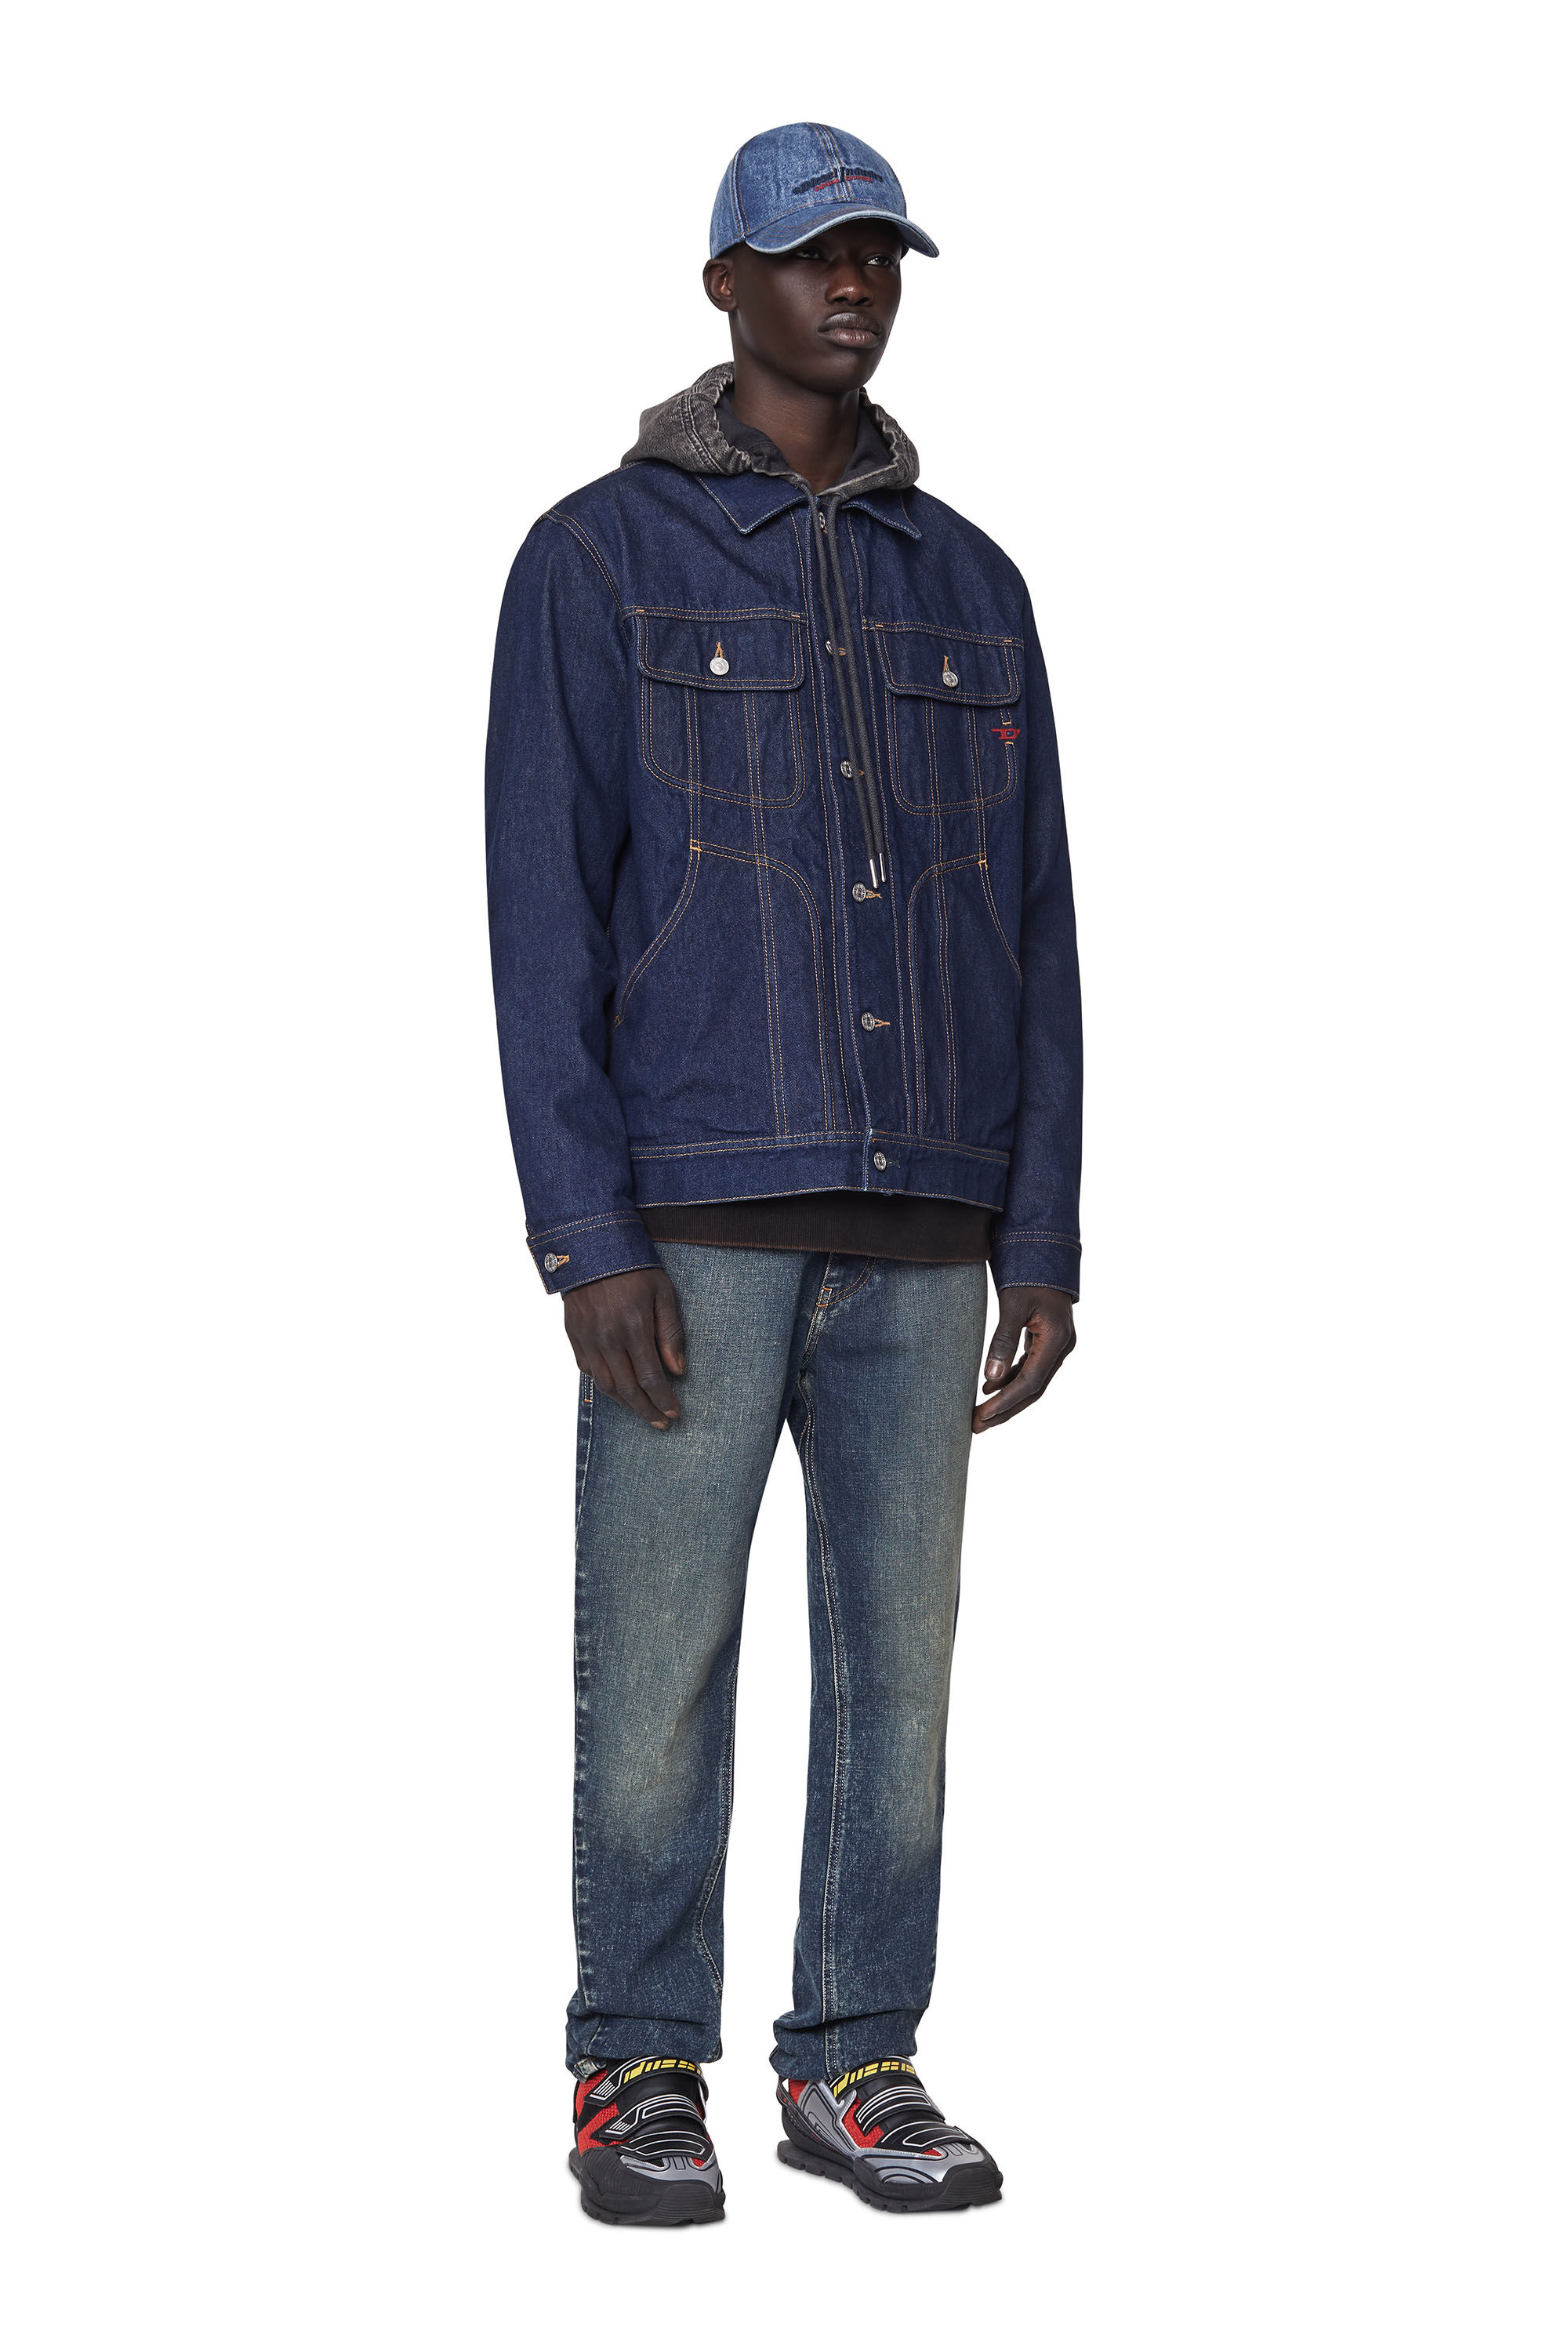 Bootcut JeansDIESEL in Denim da Uomo colore Blu 6% di sconto Uomo Abbigliamento da Jeans da Jeans bootcut 